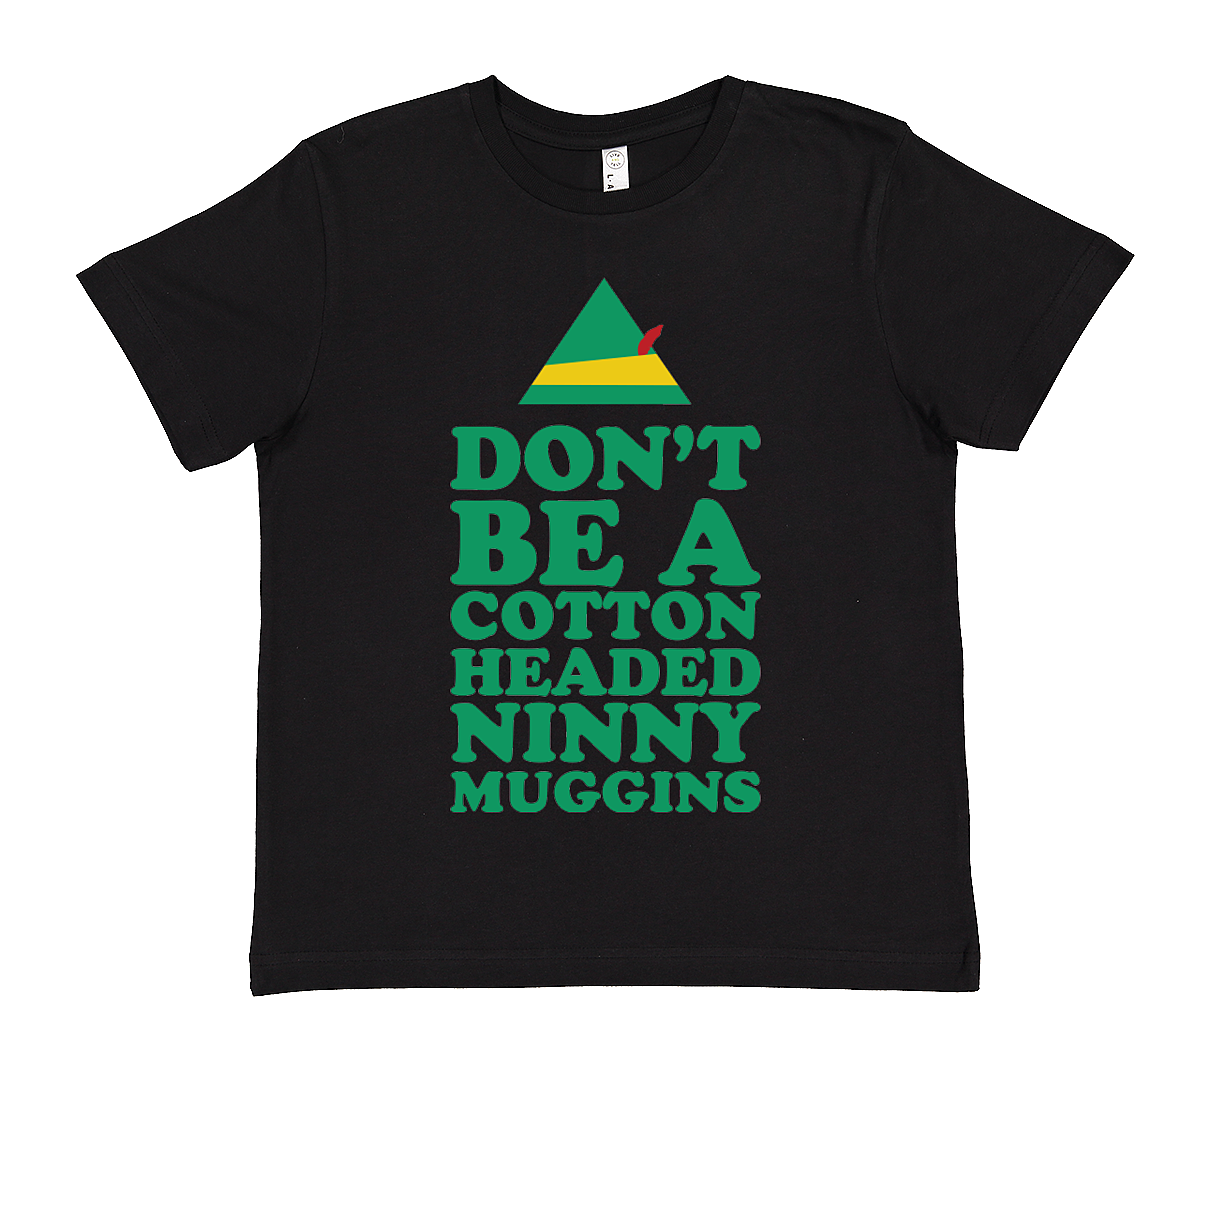 Ninny Muggins Kids T-Shirt